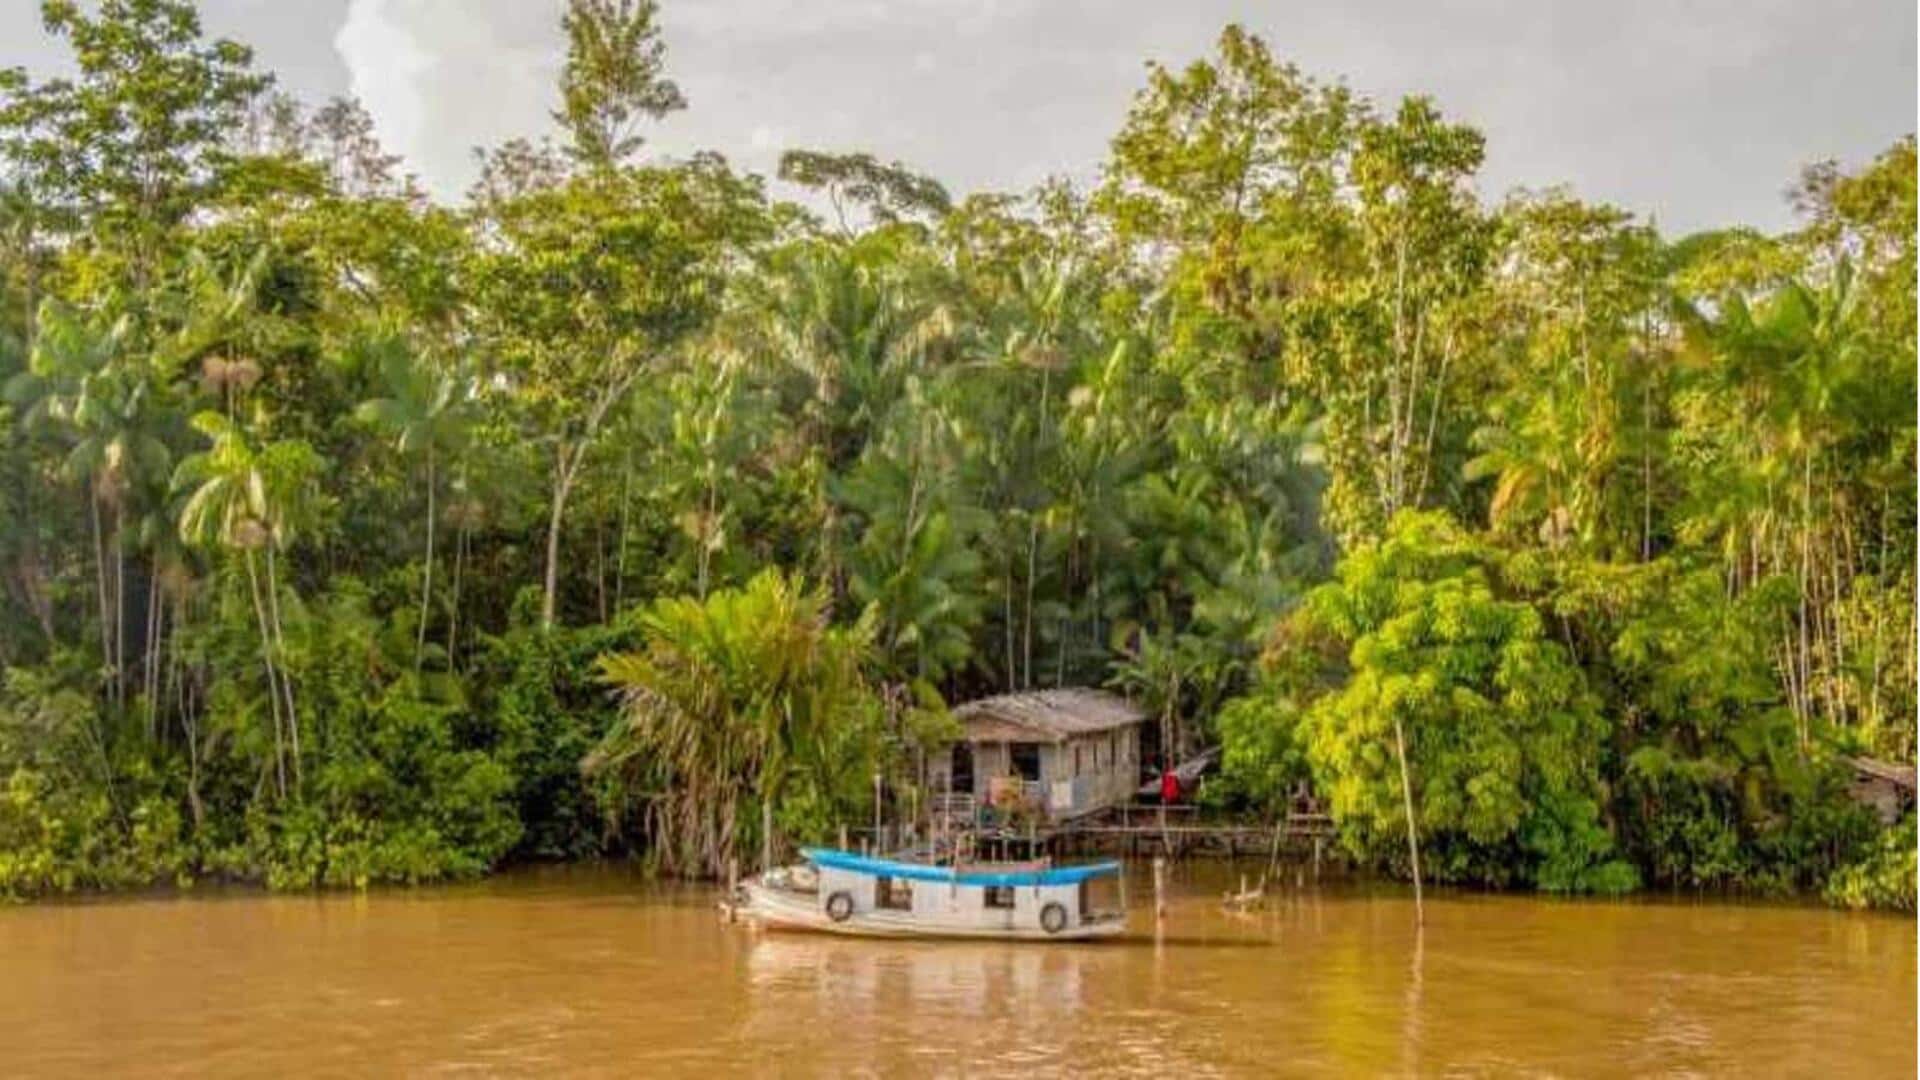 Ungkap misteri hutan hujan Lembah Amazon dengan rekomendasi perjalanan berikut 